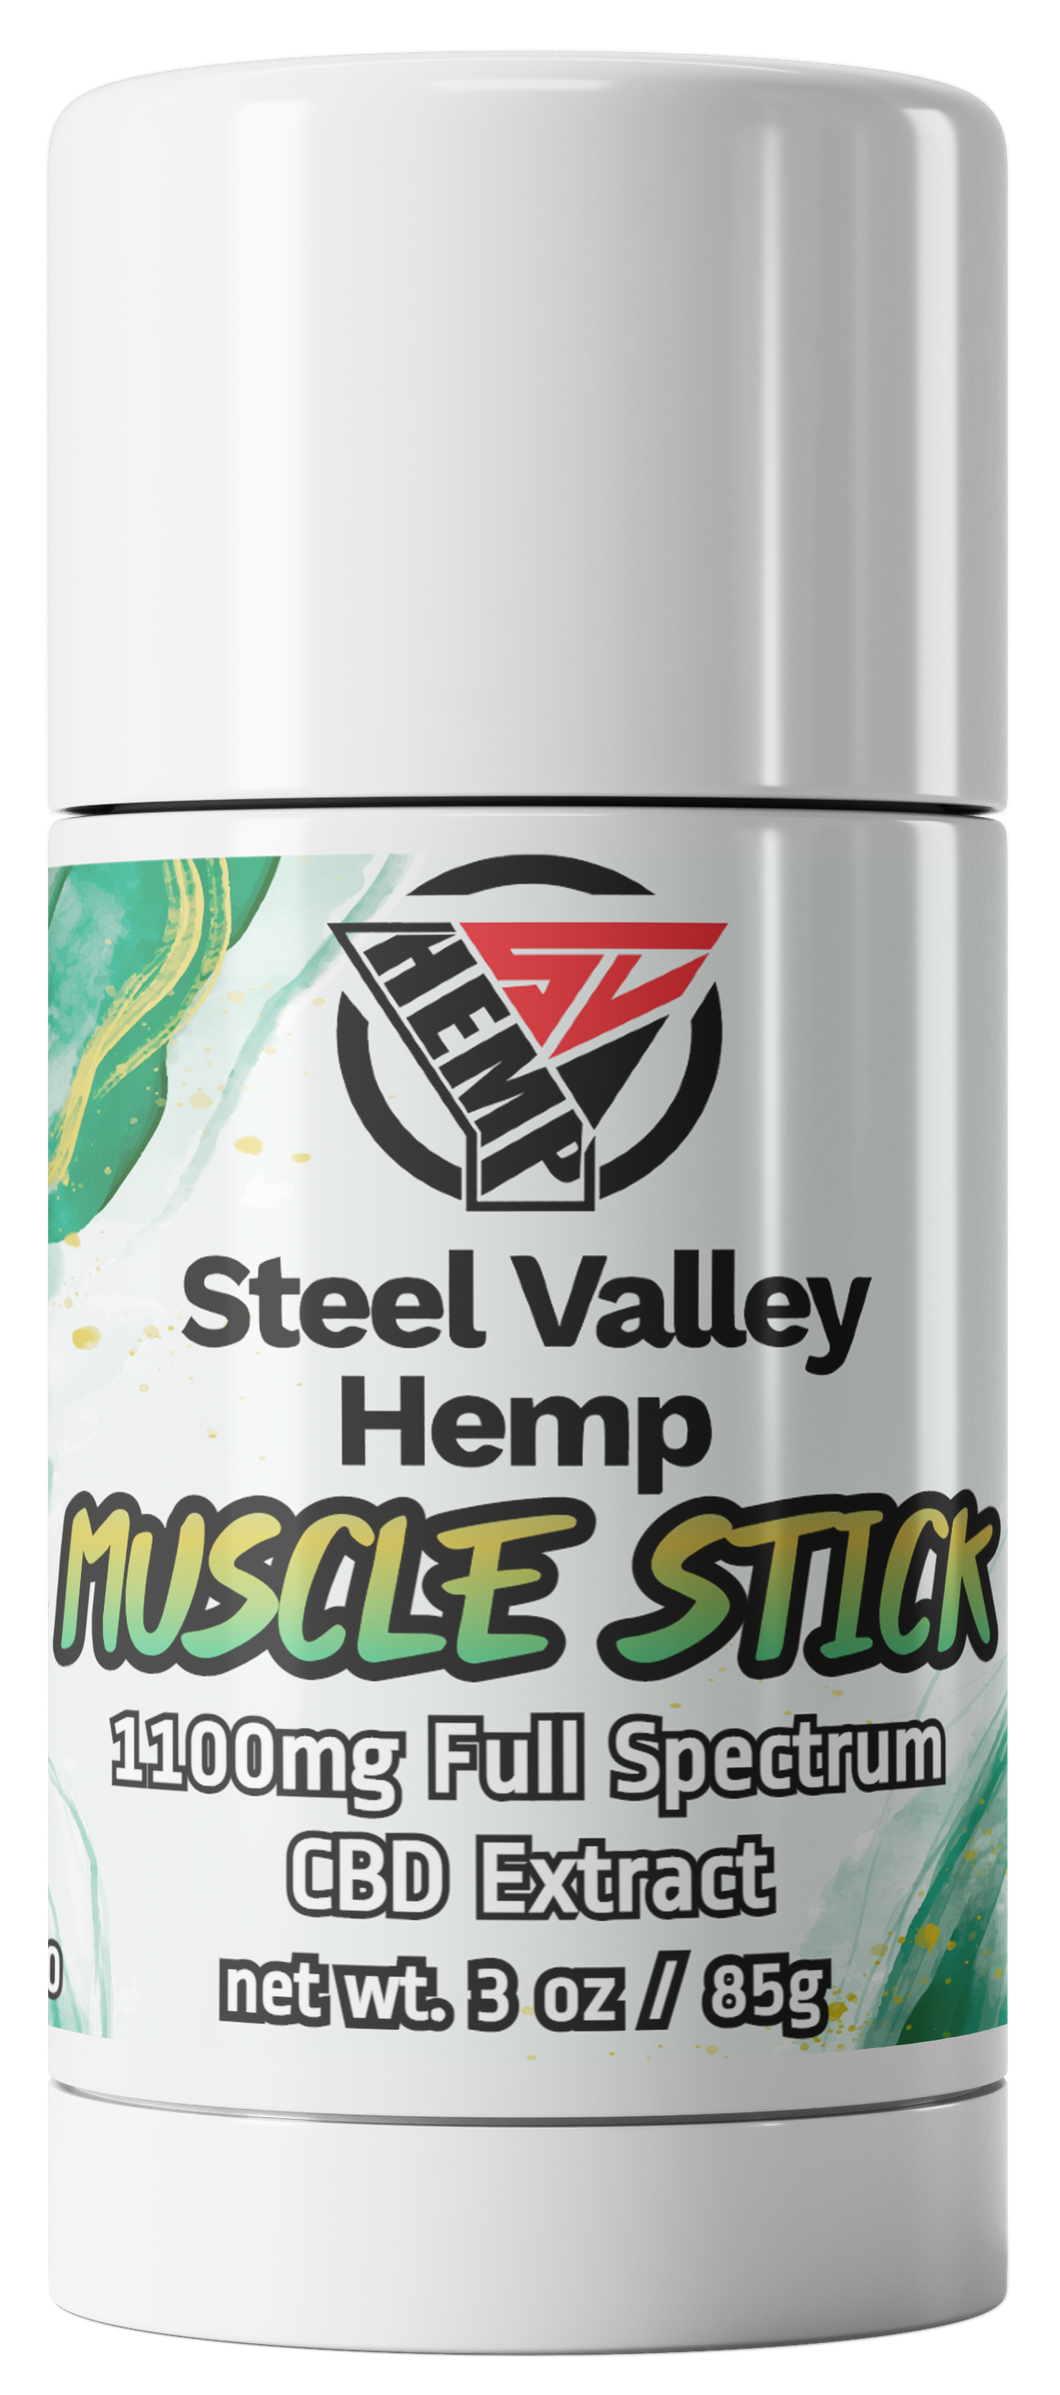 Steel Valley Hemp CBD Infused Muscle Stick